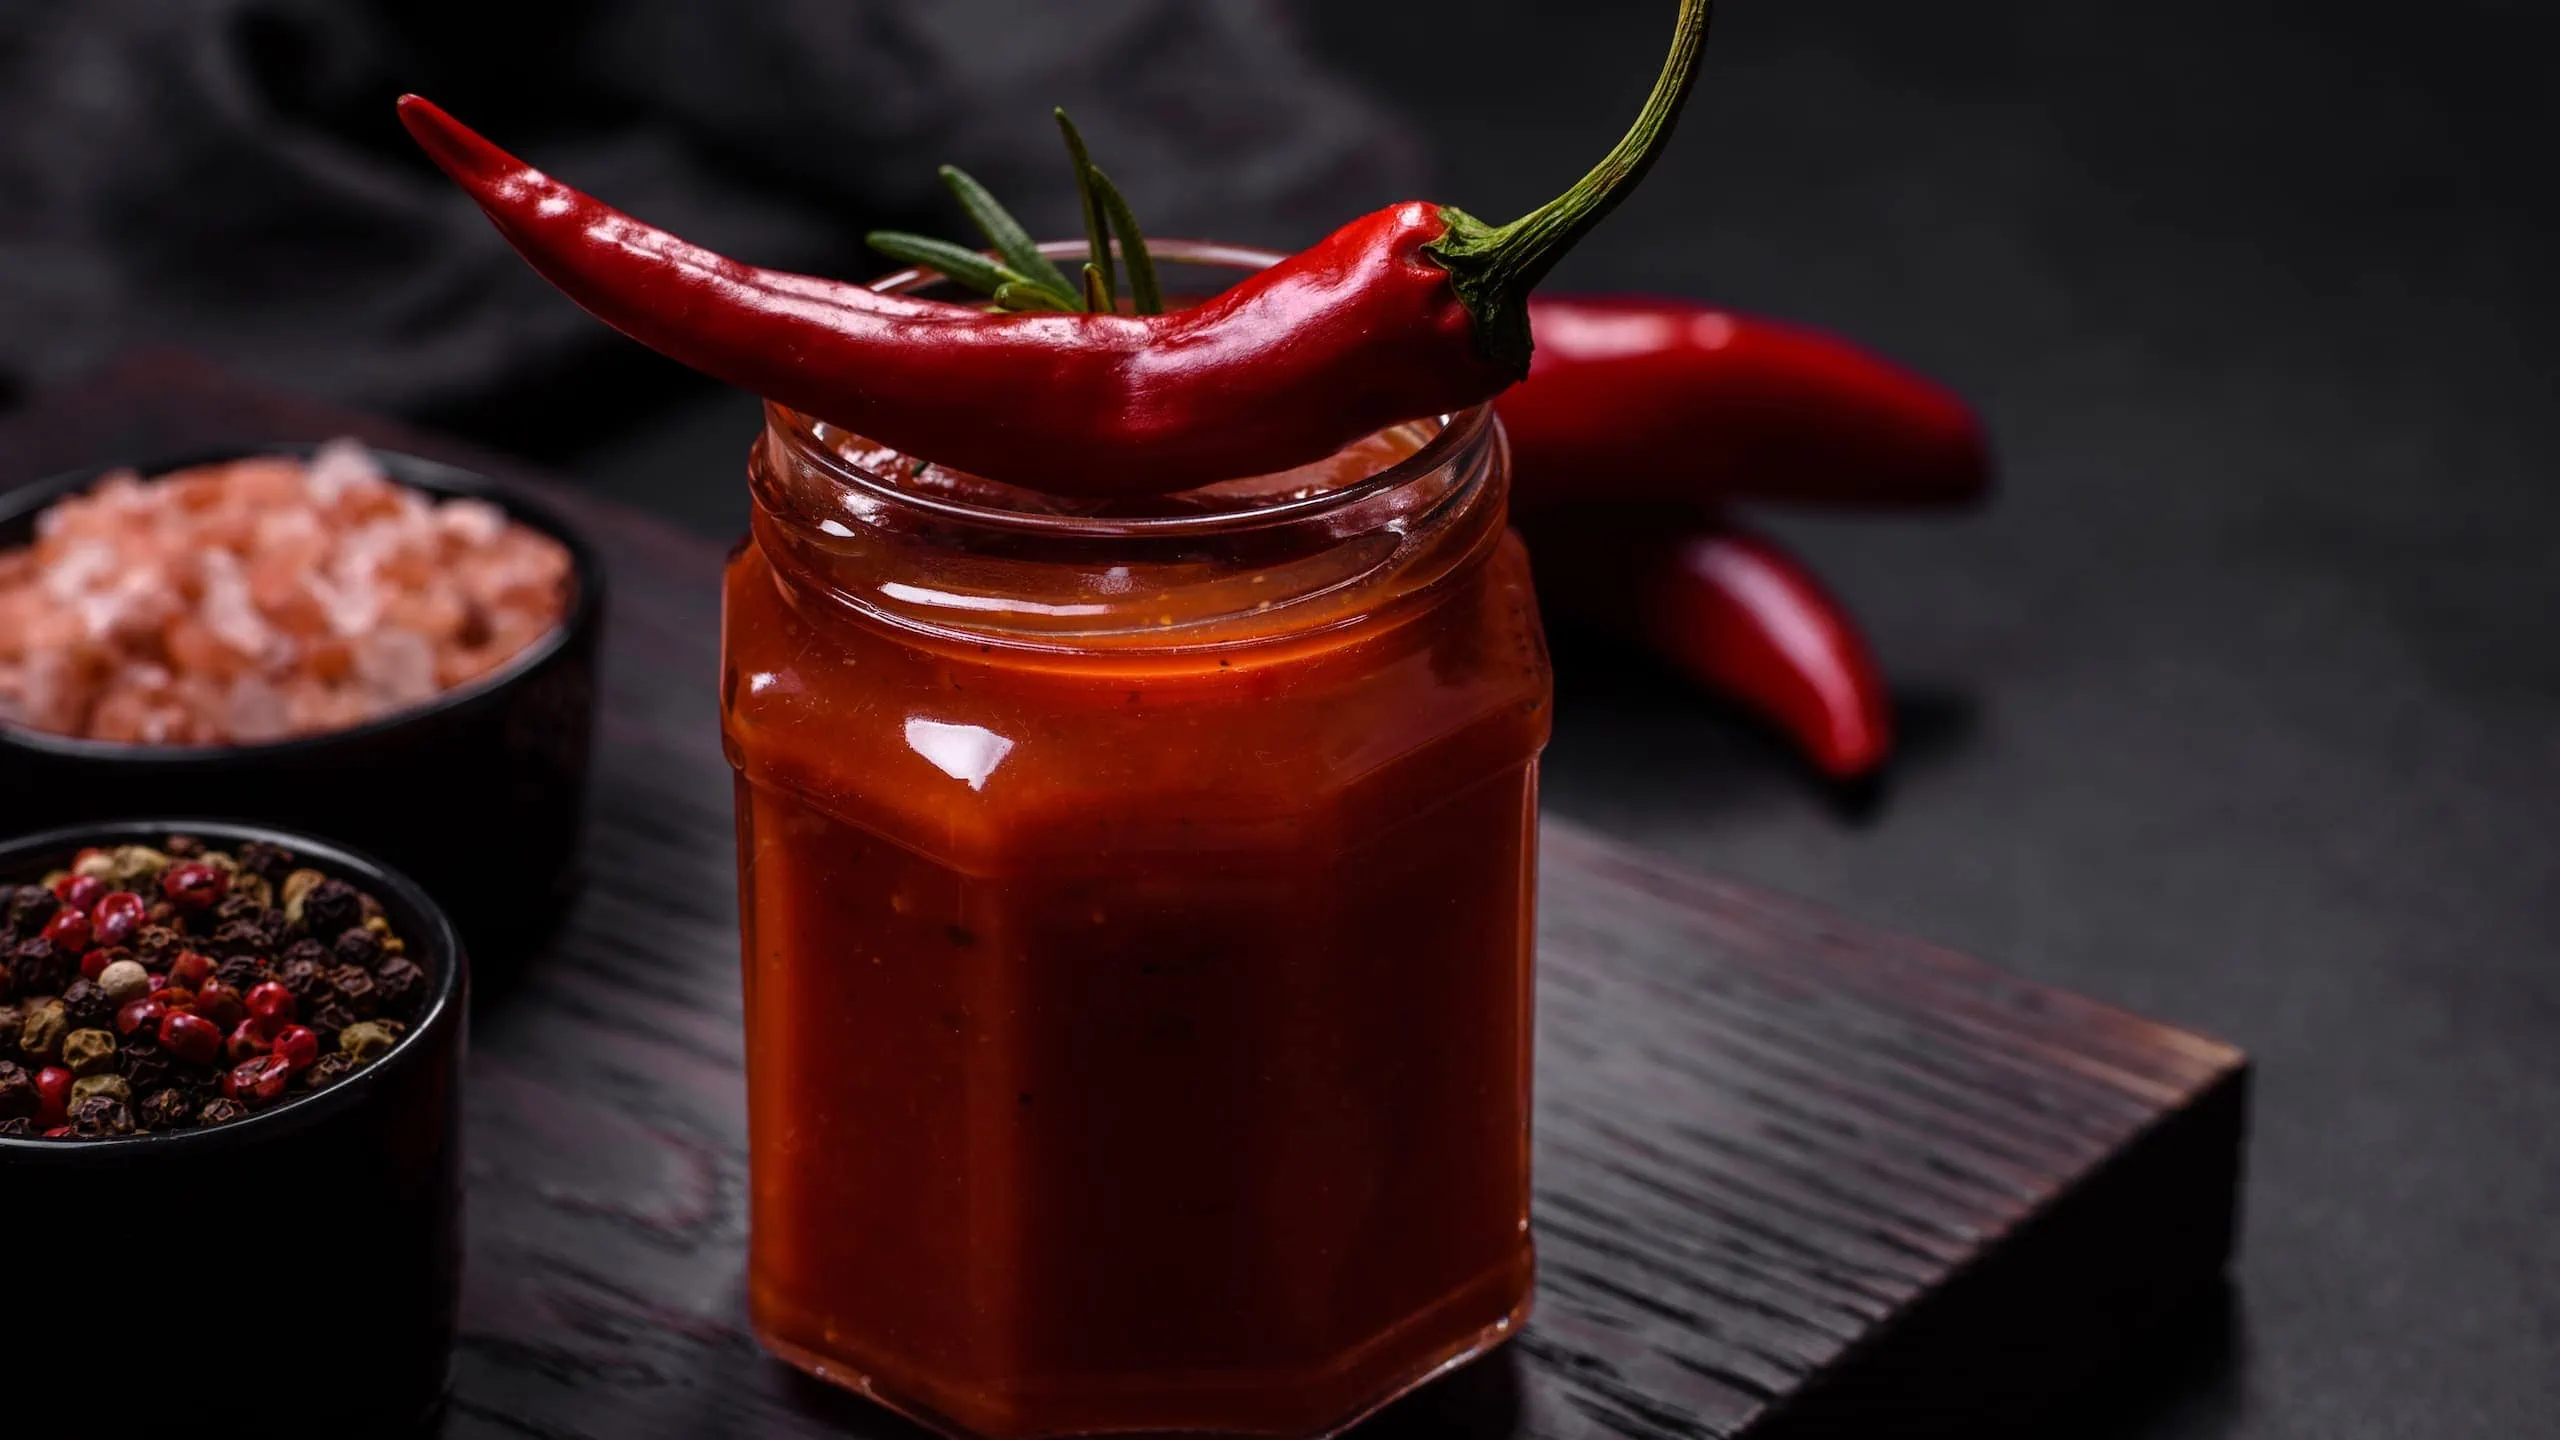 Our version of Carolina Reaper hot sauce